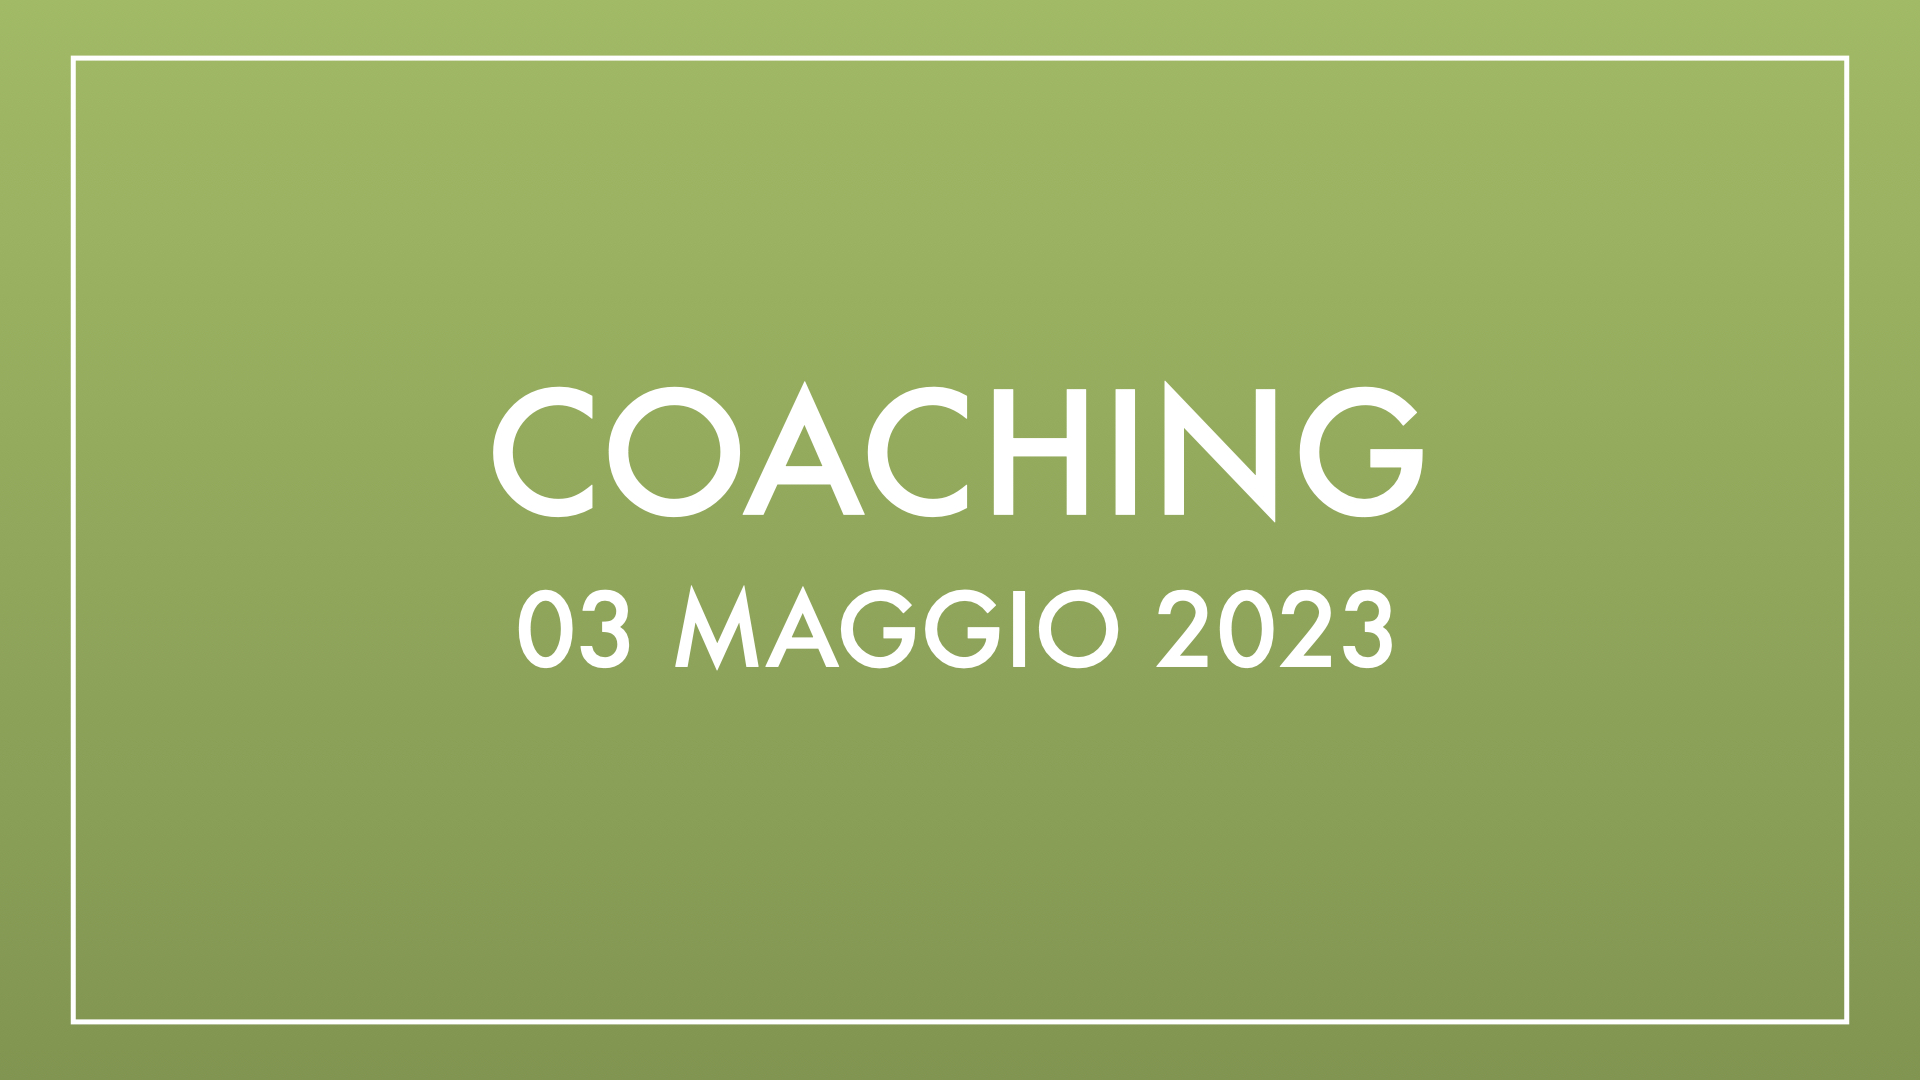 Coaching 03 maggio 2023